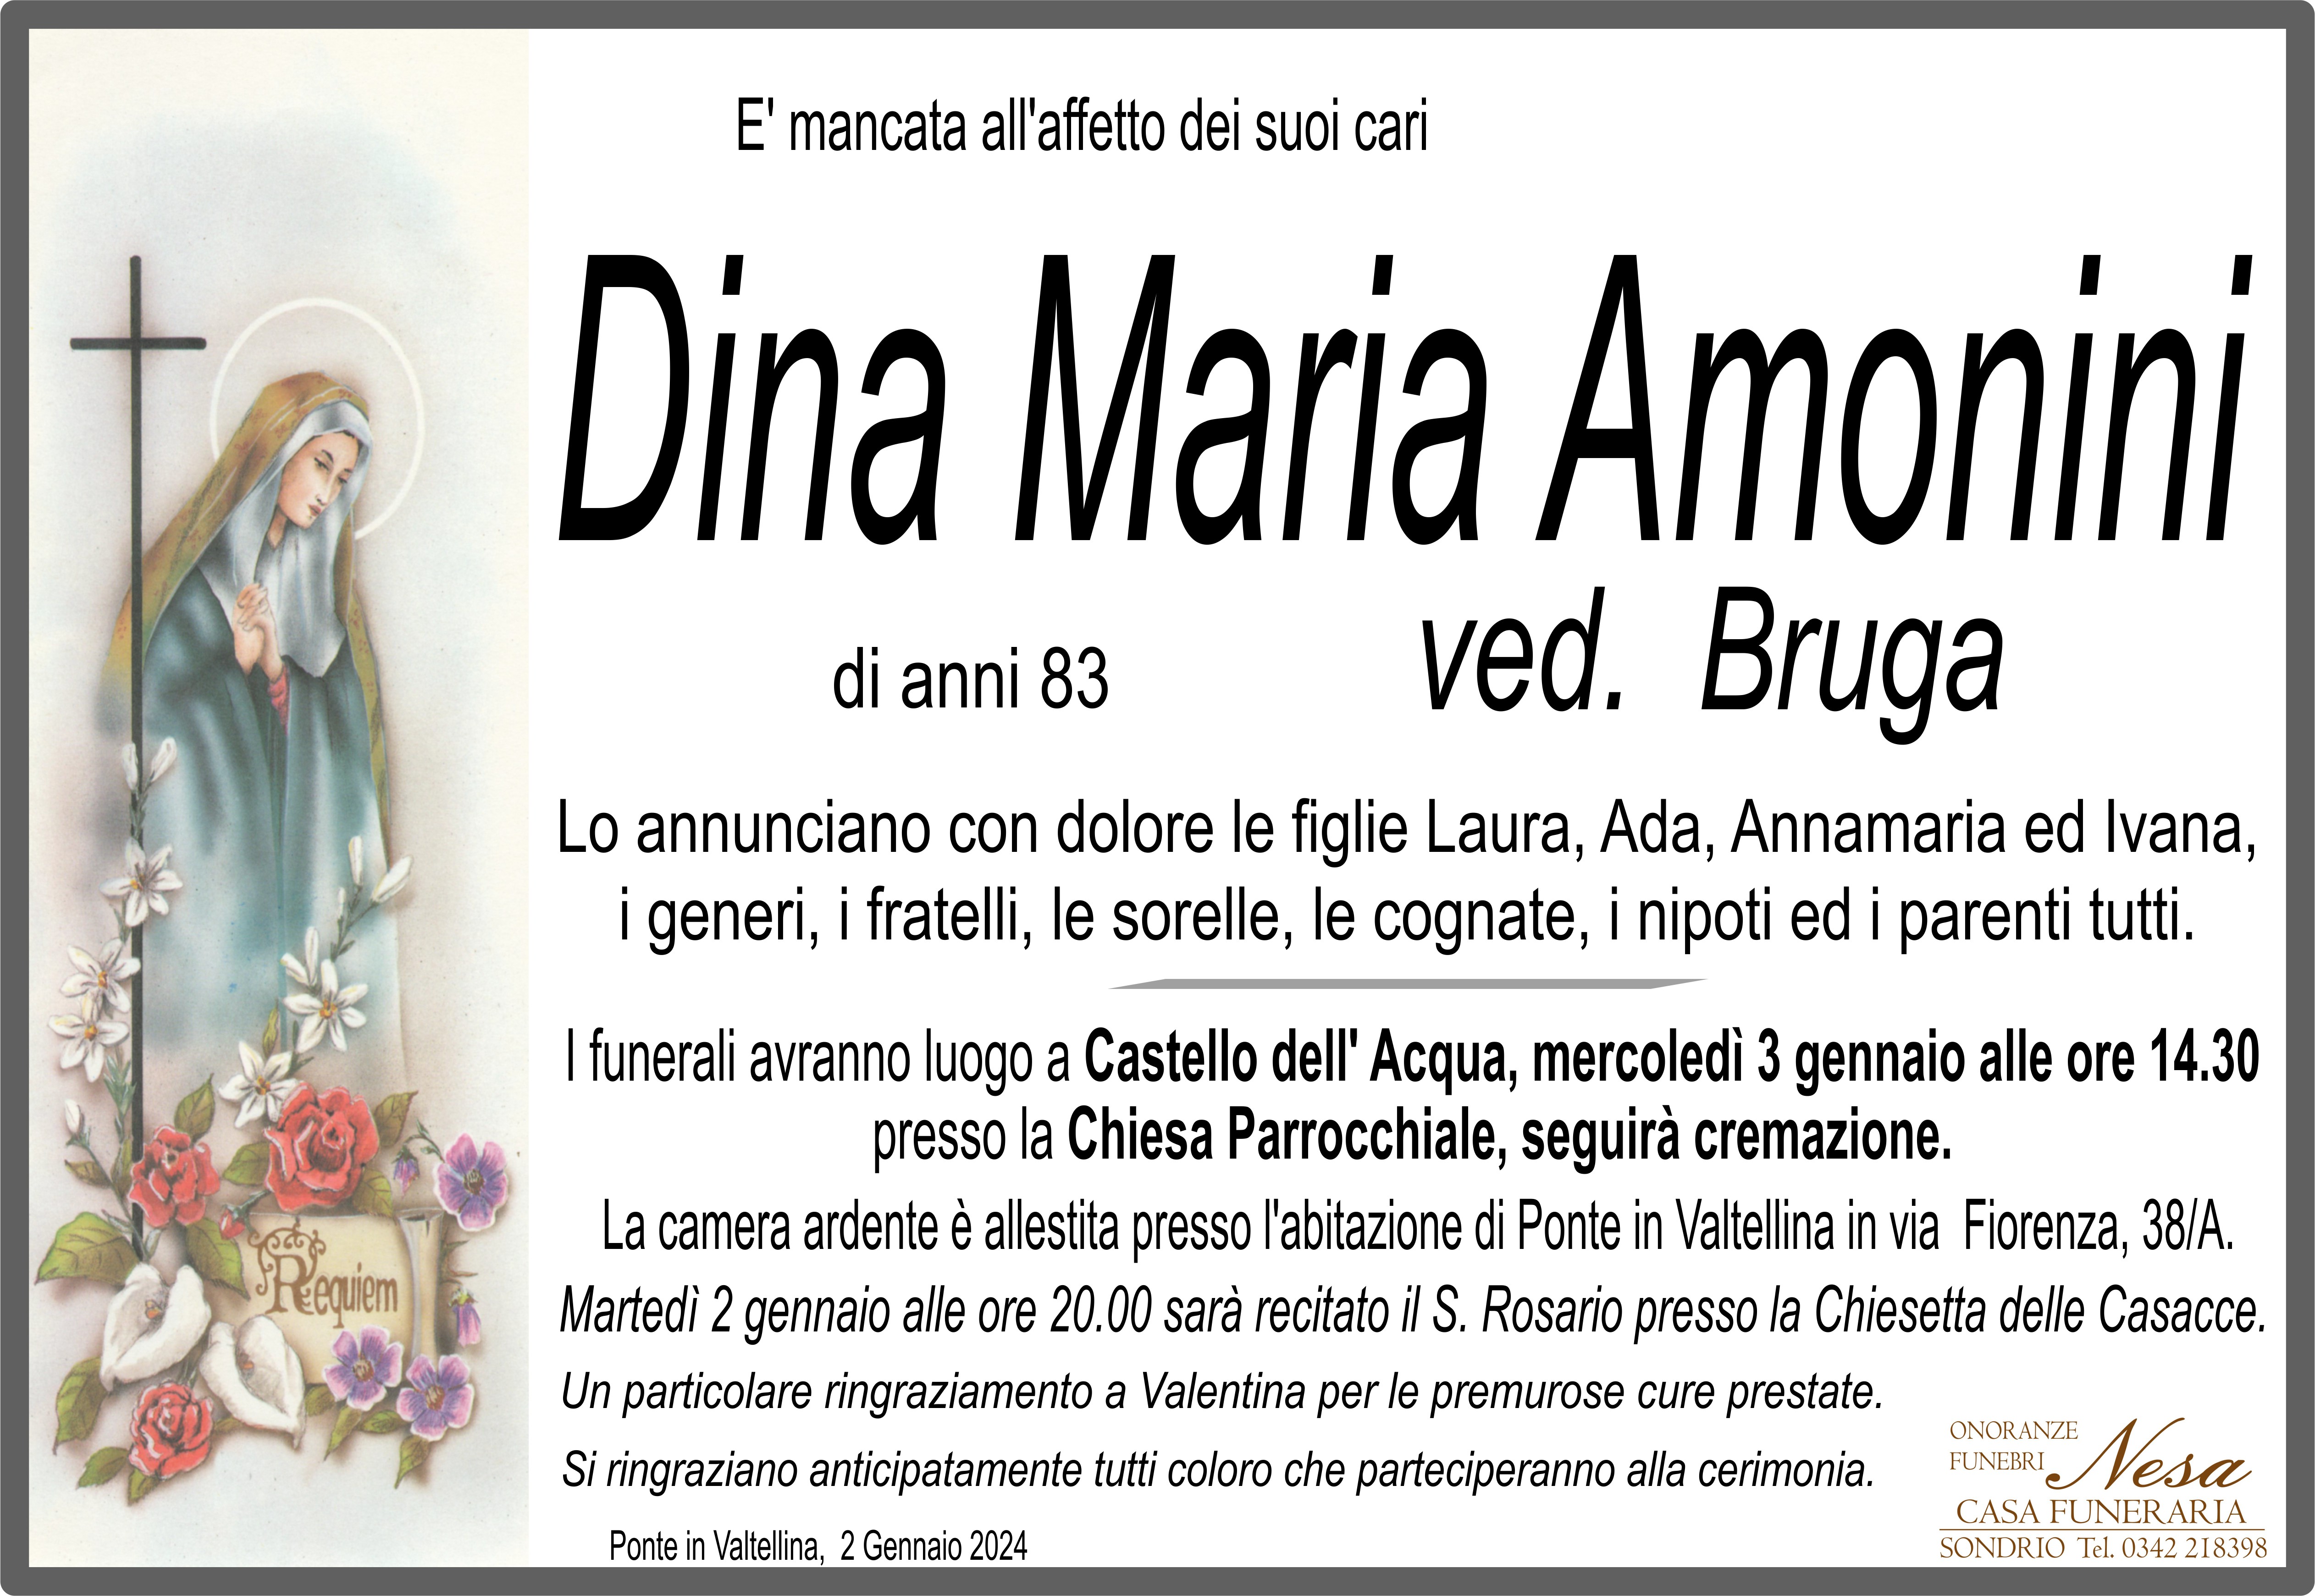 Necrologio Dina Maria Amonini ved. Bruga